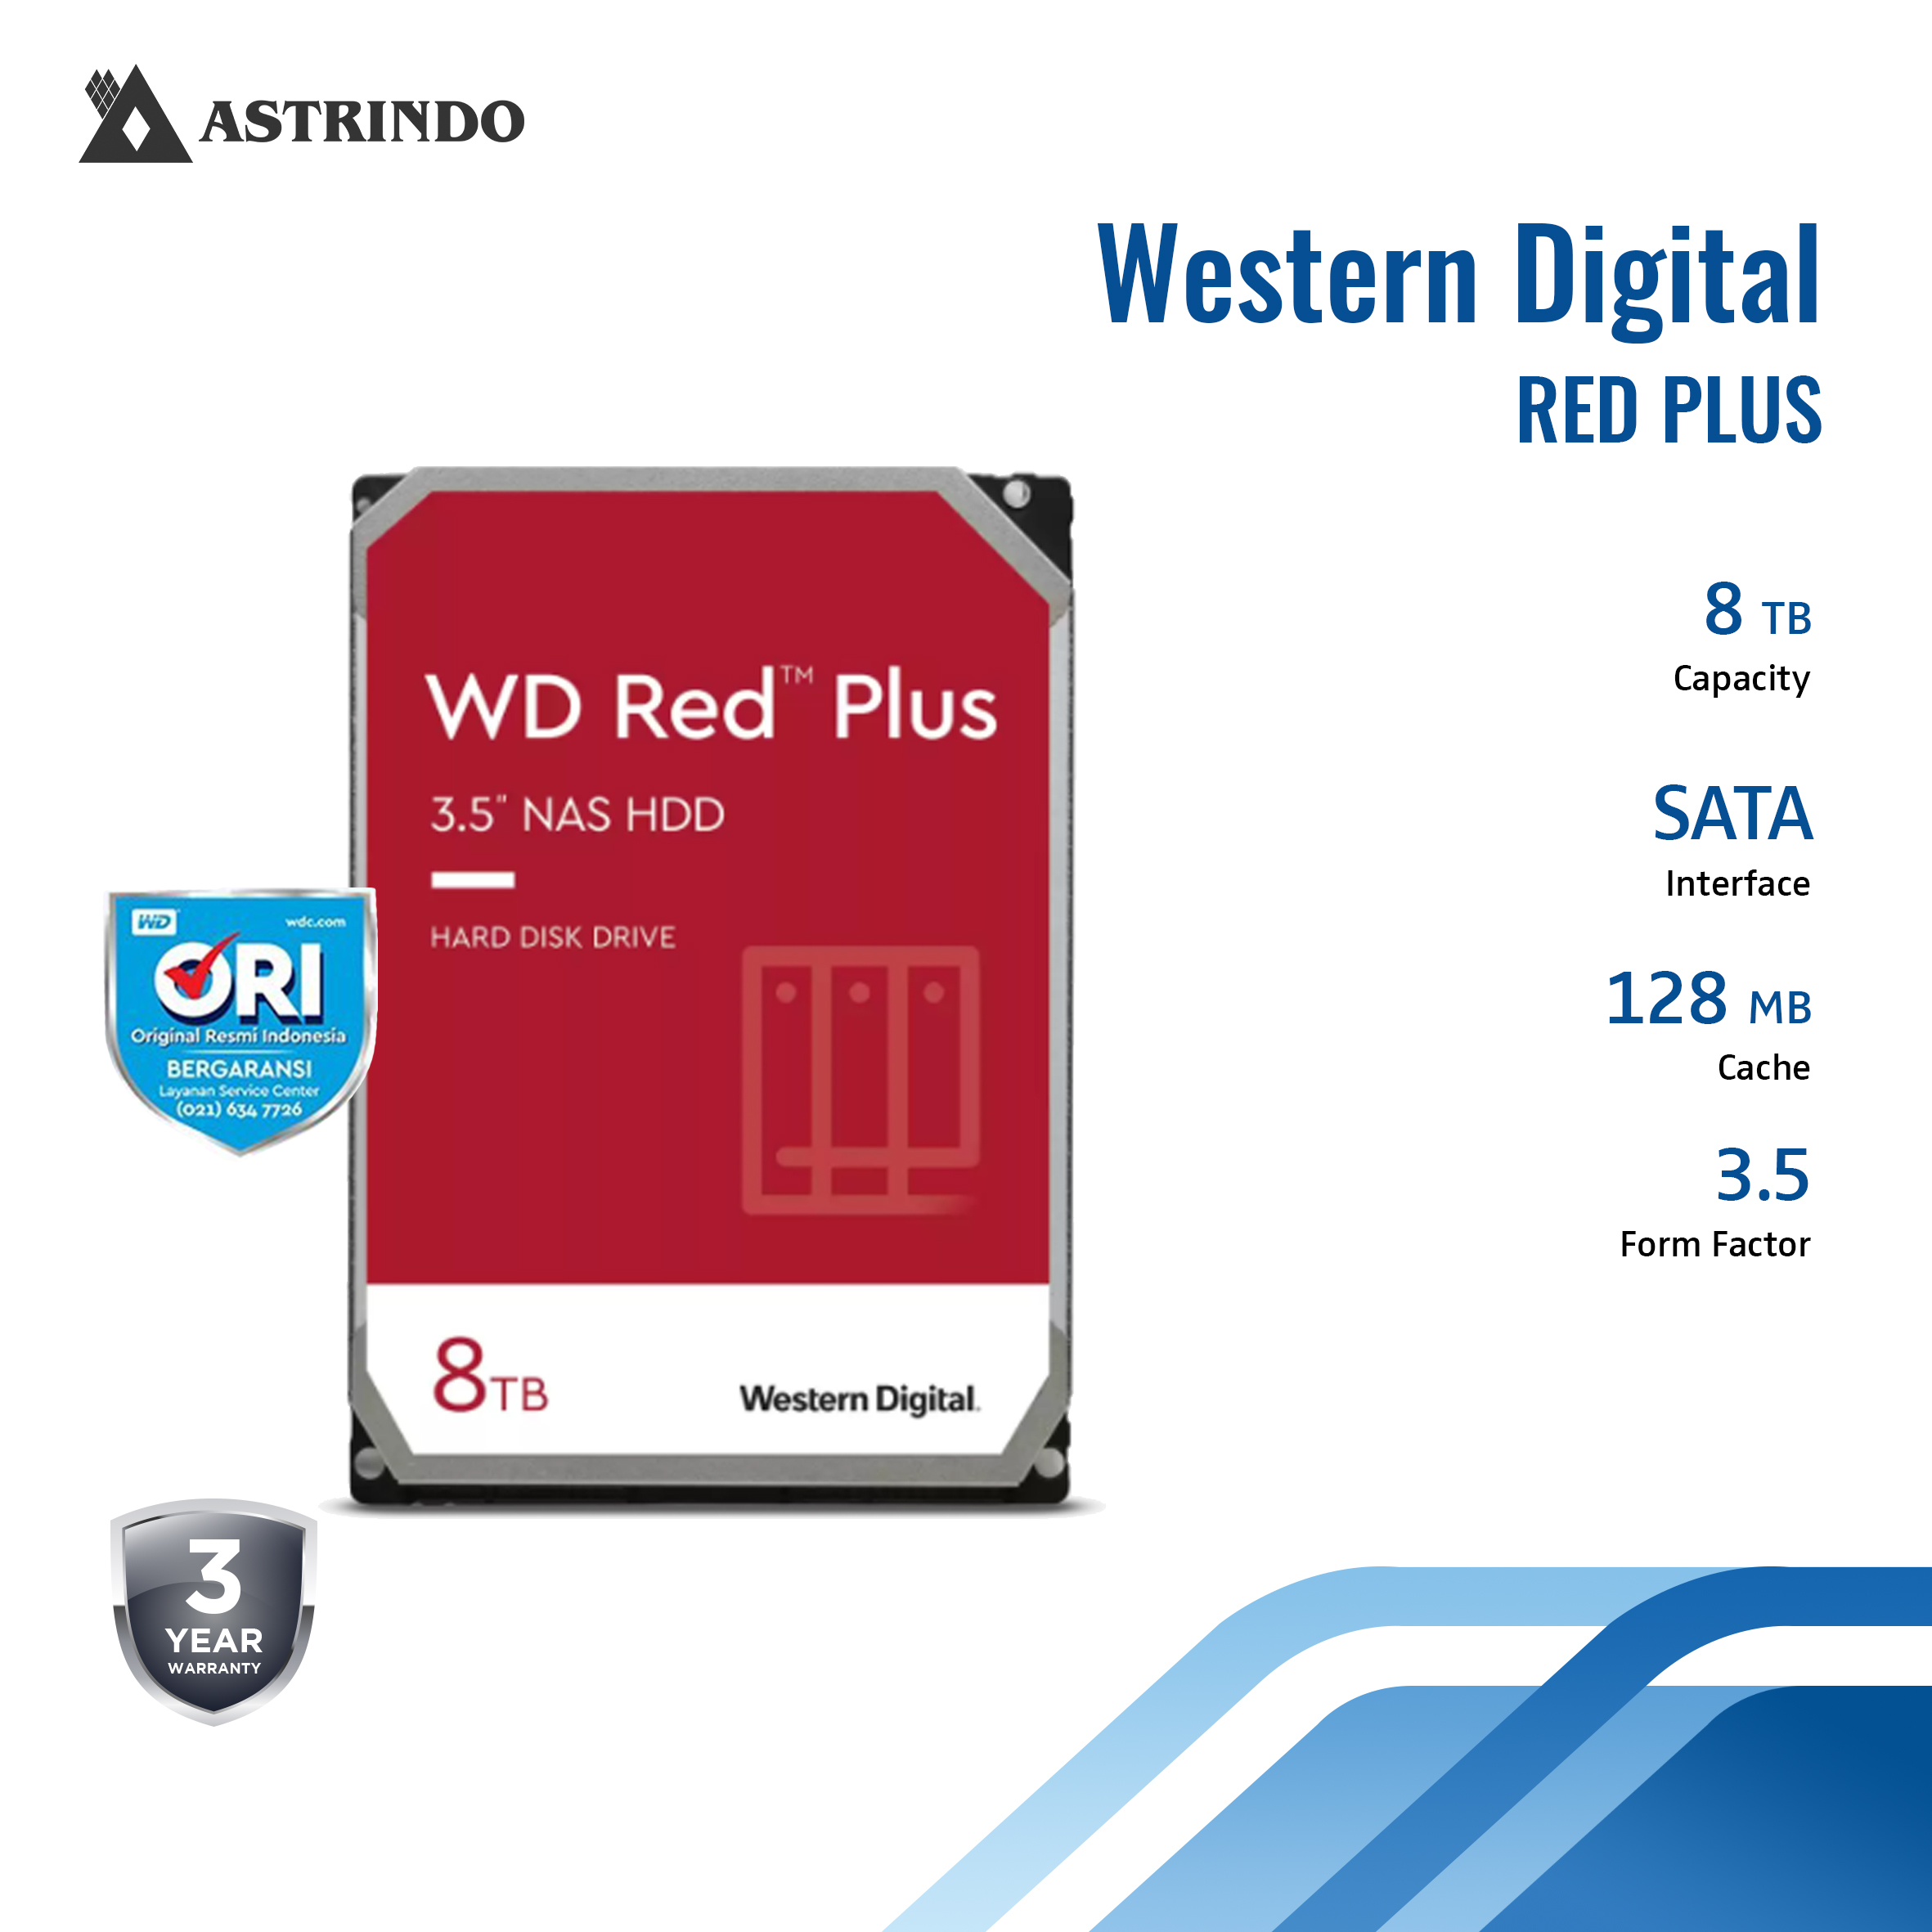 WESTERN DIGITAL Red™ Plus NAS Hard Drive 8T - Astrindostore.com